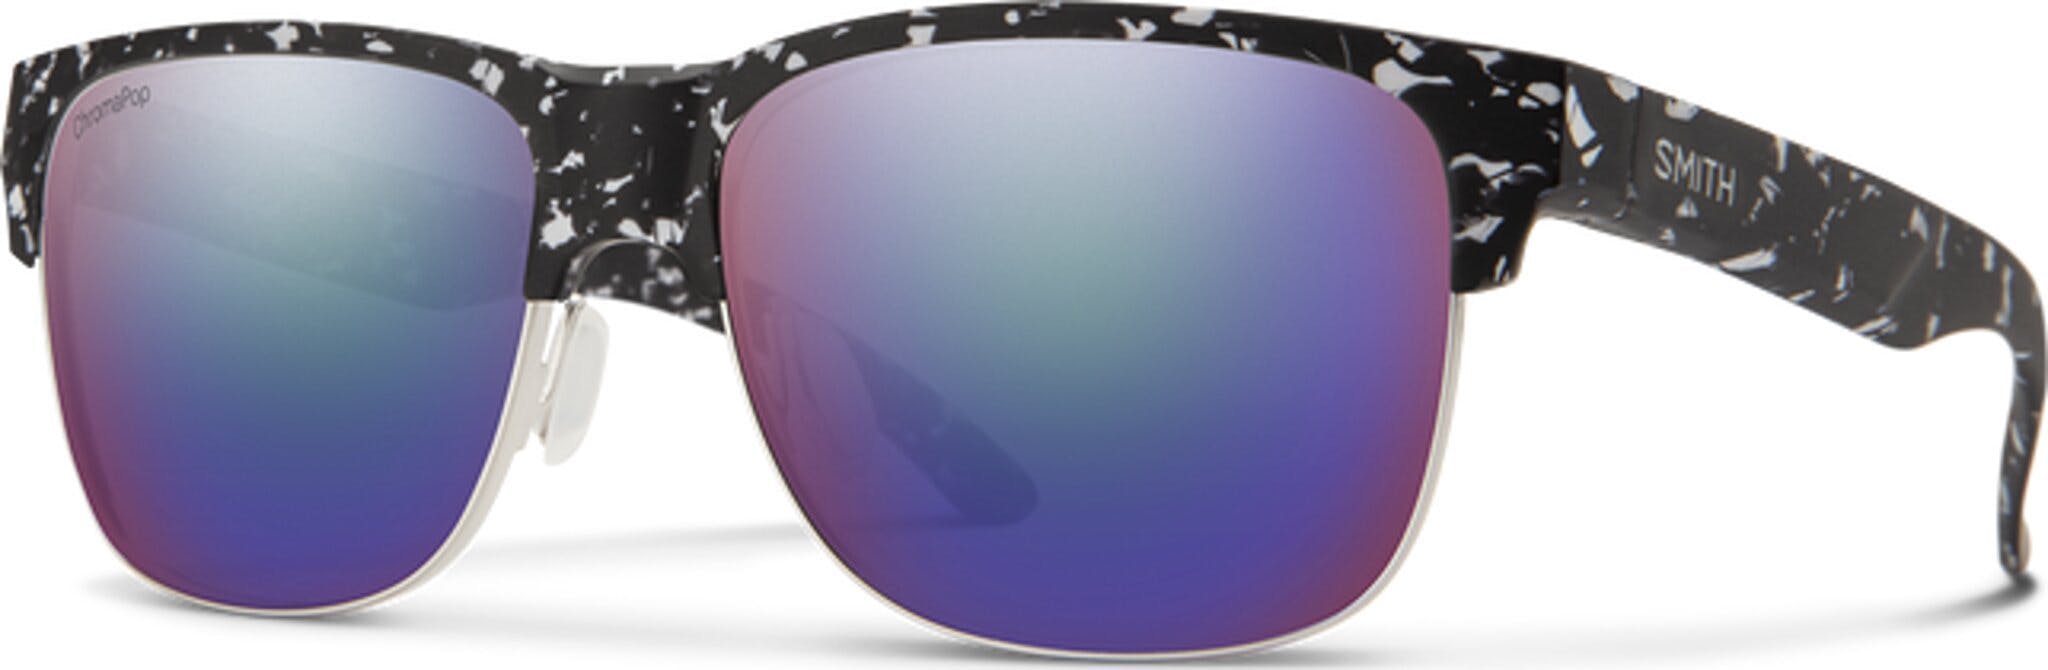 Product image for Lowdown Split Sunglasses